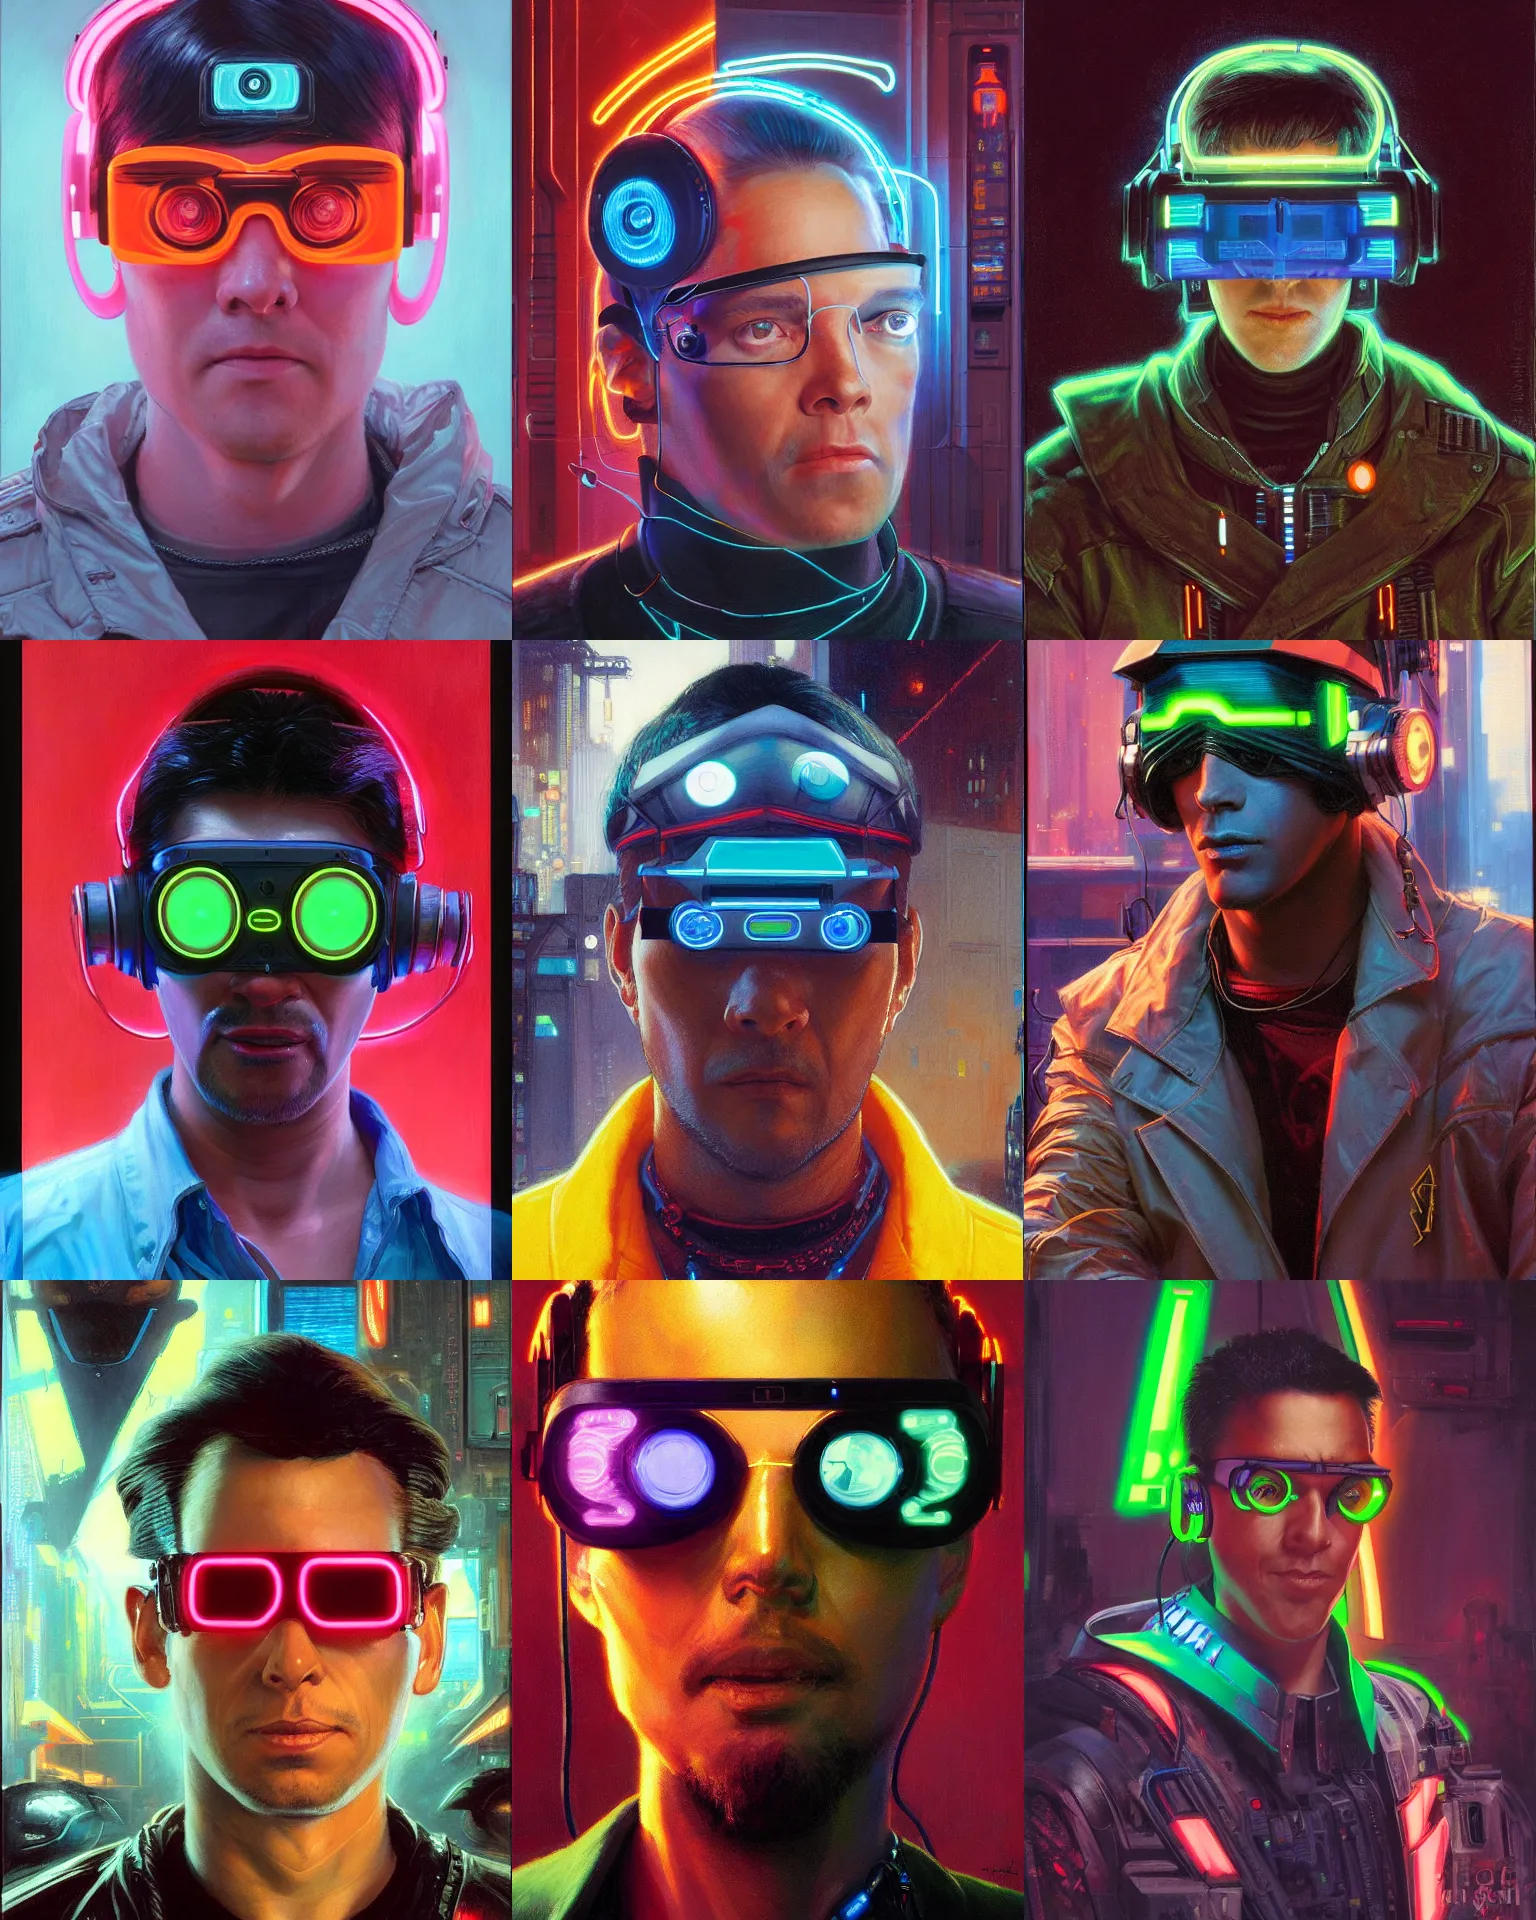 Prompt: neon cyberpunk programmer with geordi eye visor and headset headshot portrait painting by donato giancola, kilian eng, john berkley, hayao miyazaki, j. c. leyendecker, mead schaeffer fashion photography